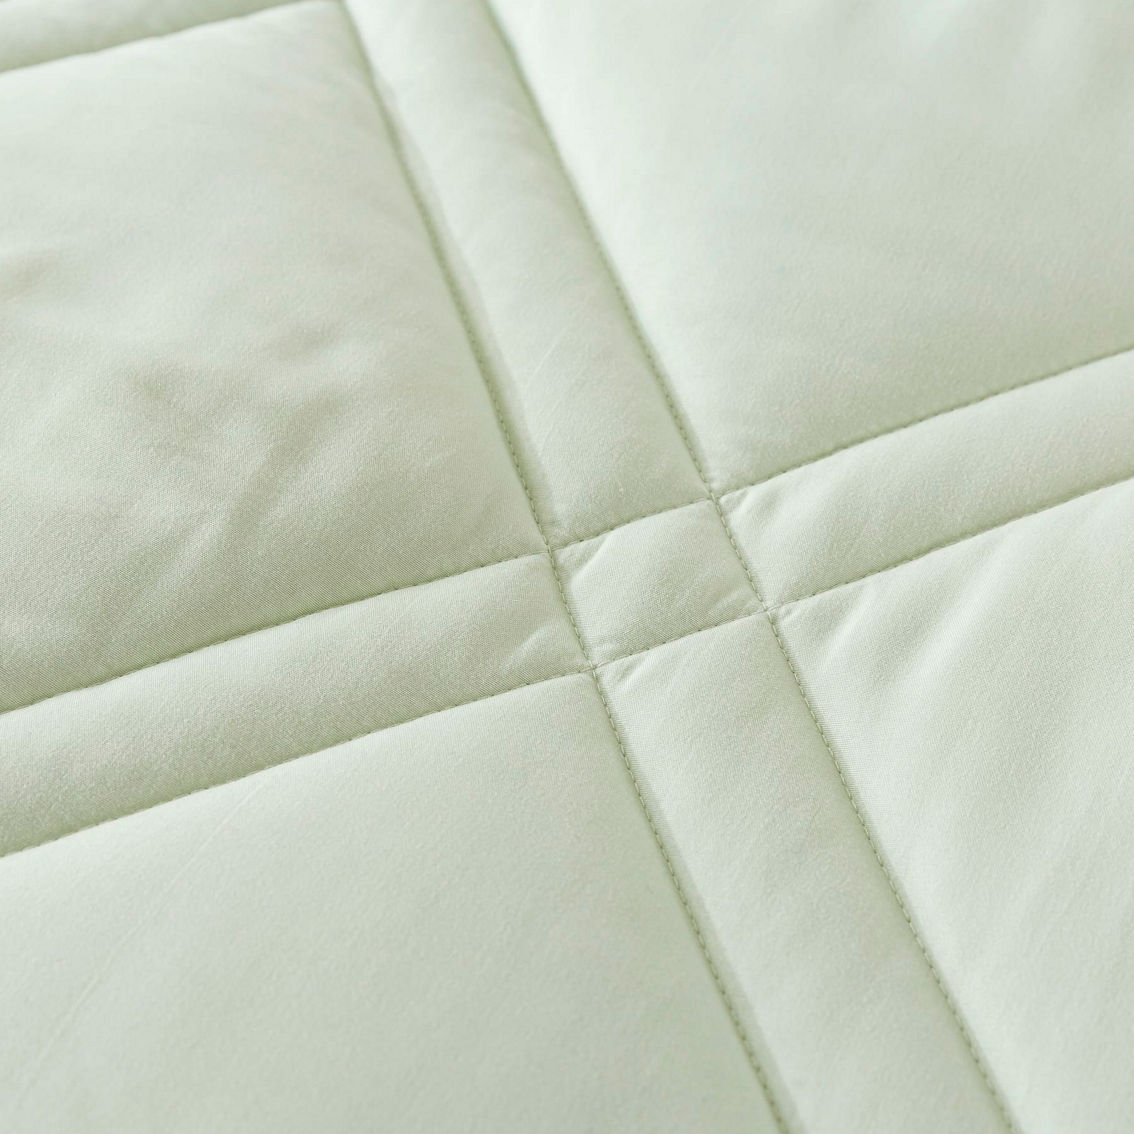 Double Diamond Down Alternative Comforter - Image 3 of 5